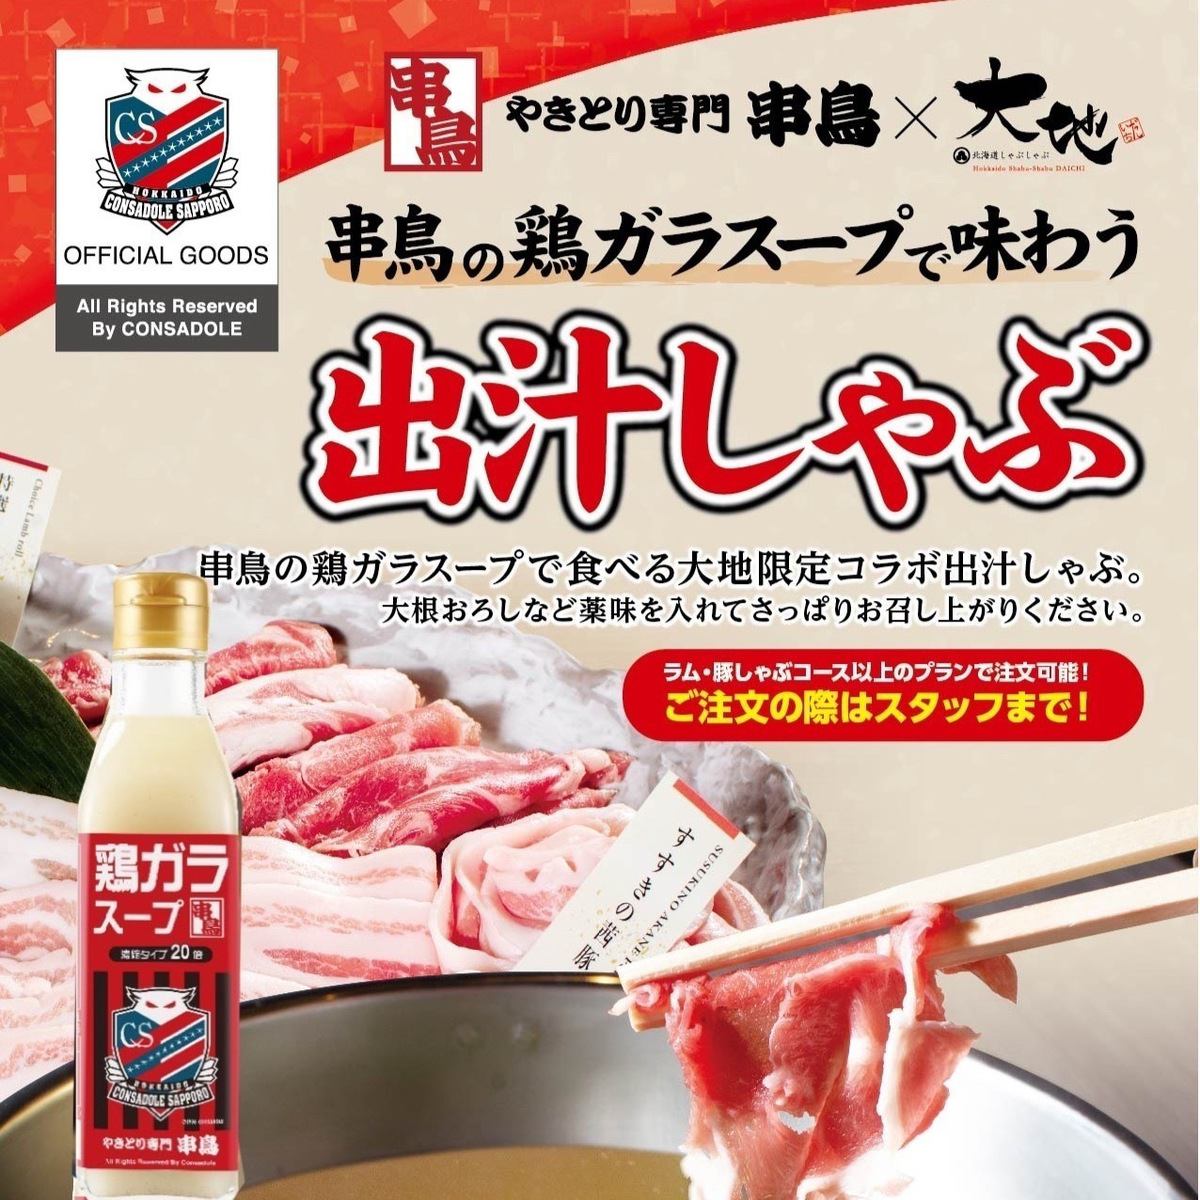 Shabu-shabu made with carefully selected lamb shabu and Sukino Akane pork from our contracted farm